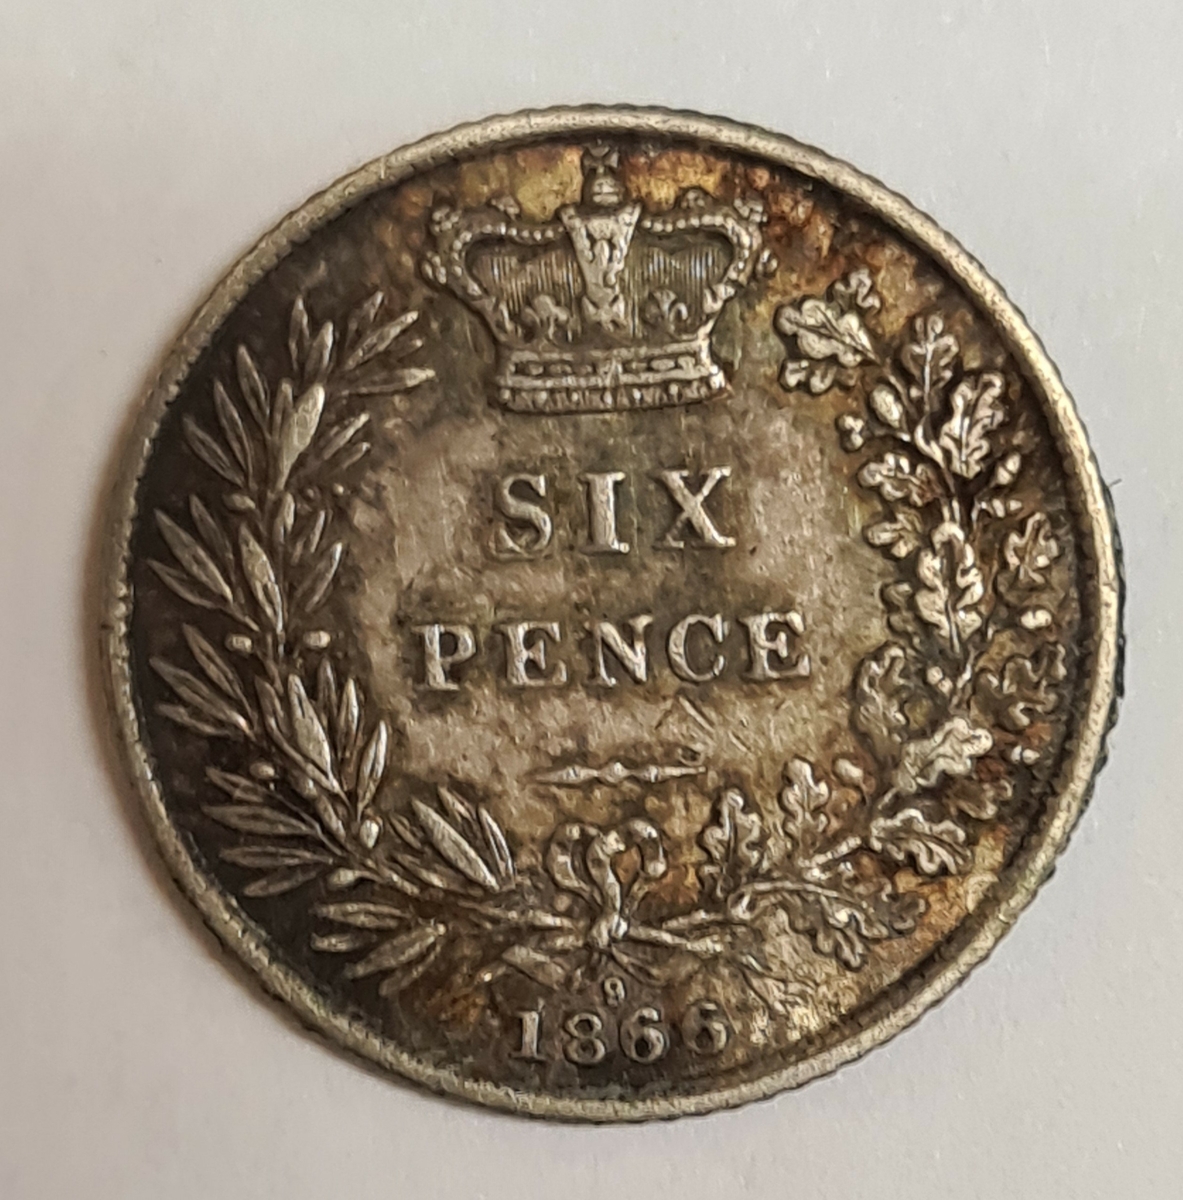 3 mynt från Storbritanien.
6 Pence, 1866
6 Pence, 1853
6 Pence, 1872